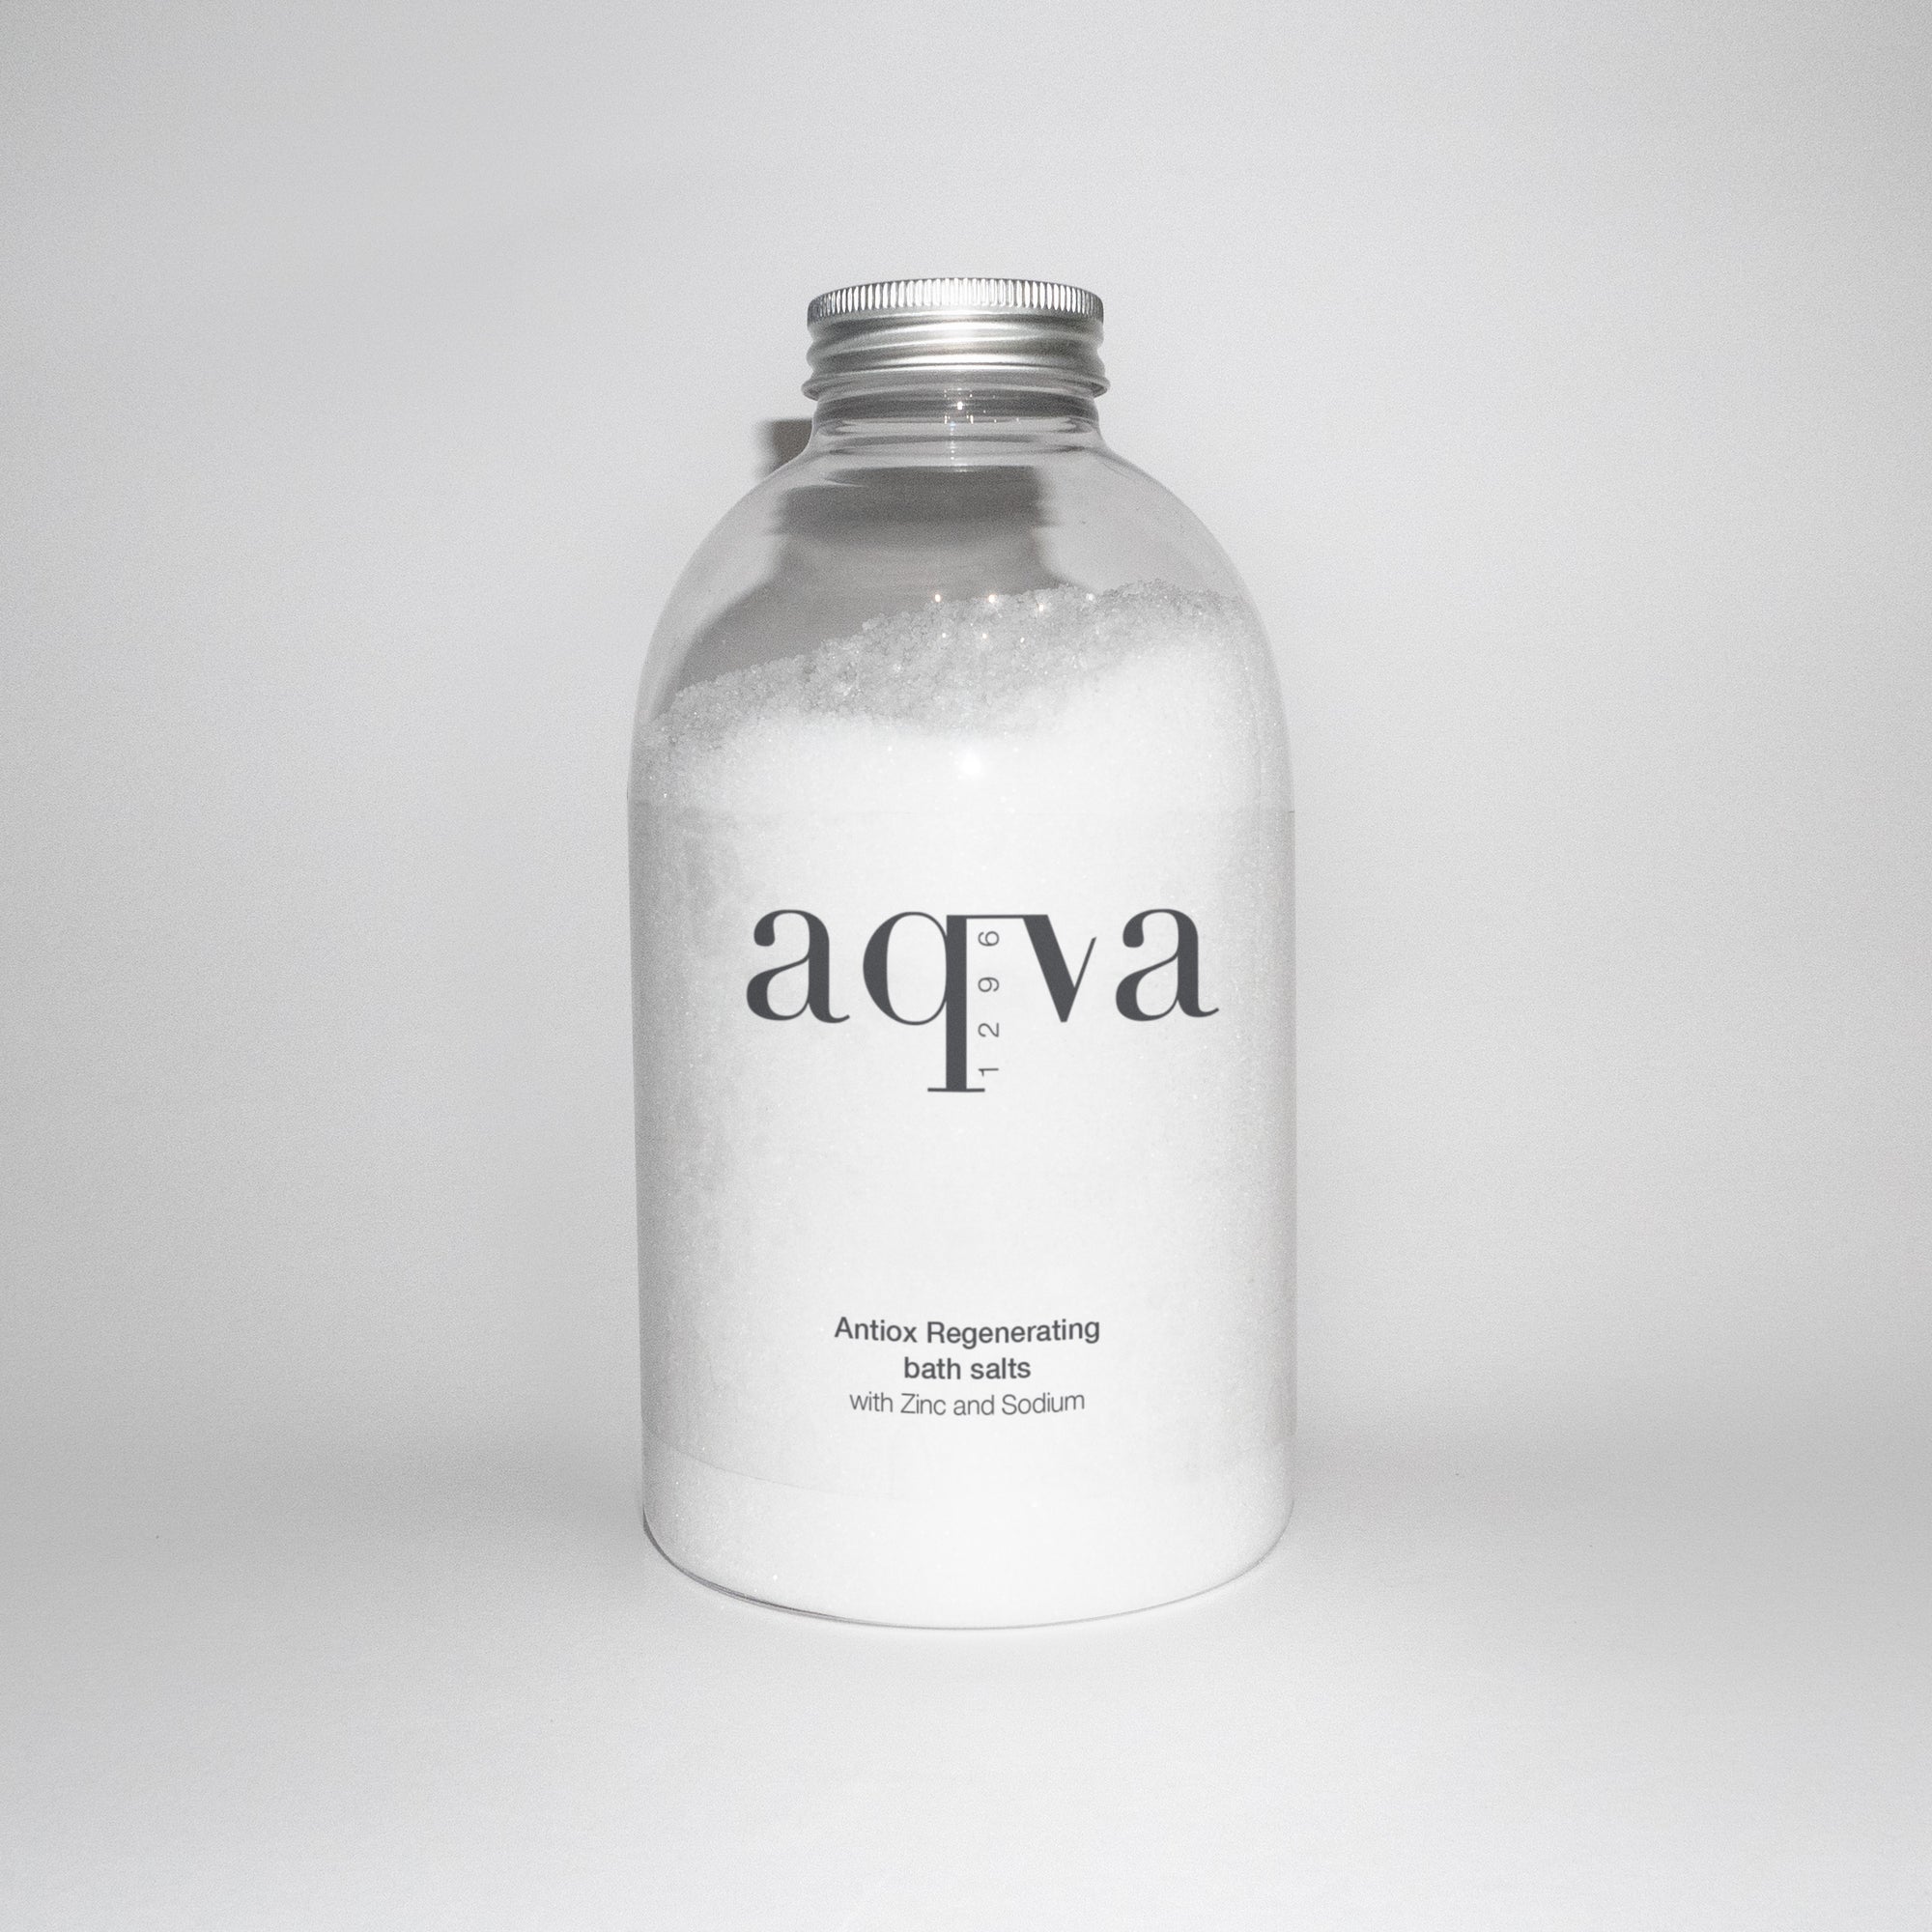 Aqva1296 - Antiox bath salts - LaVit Collection